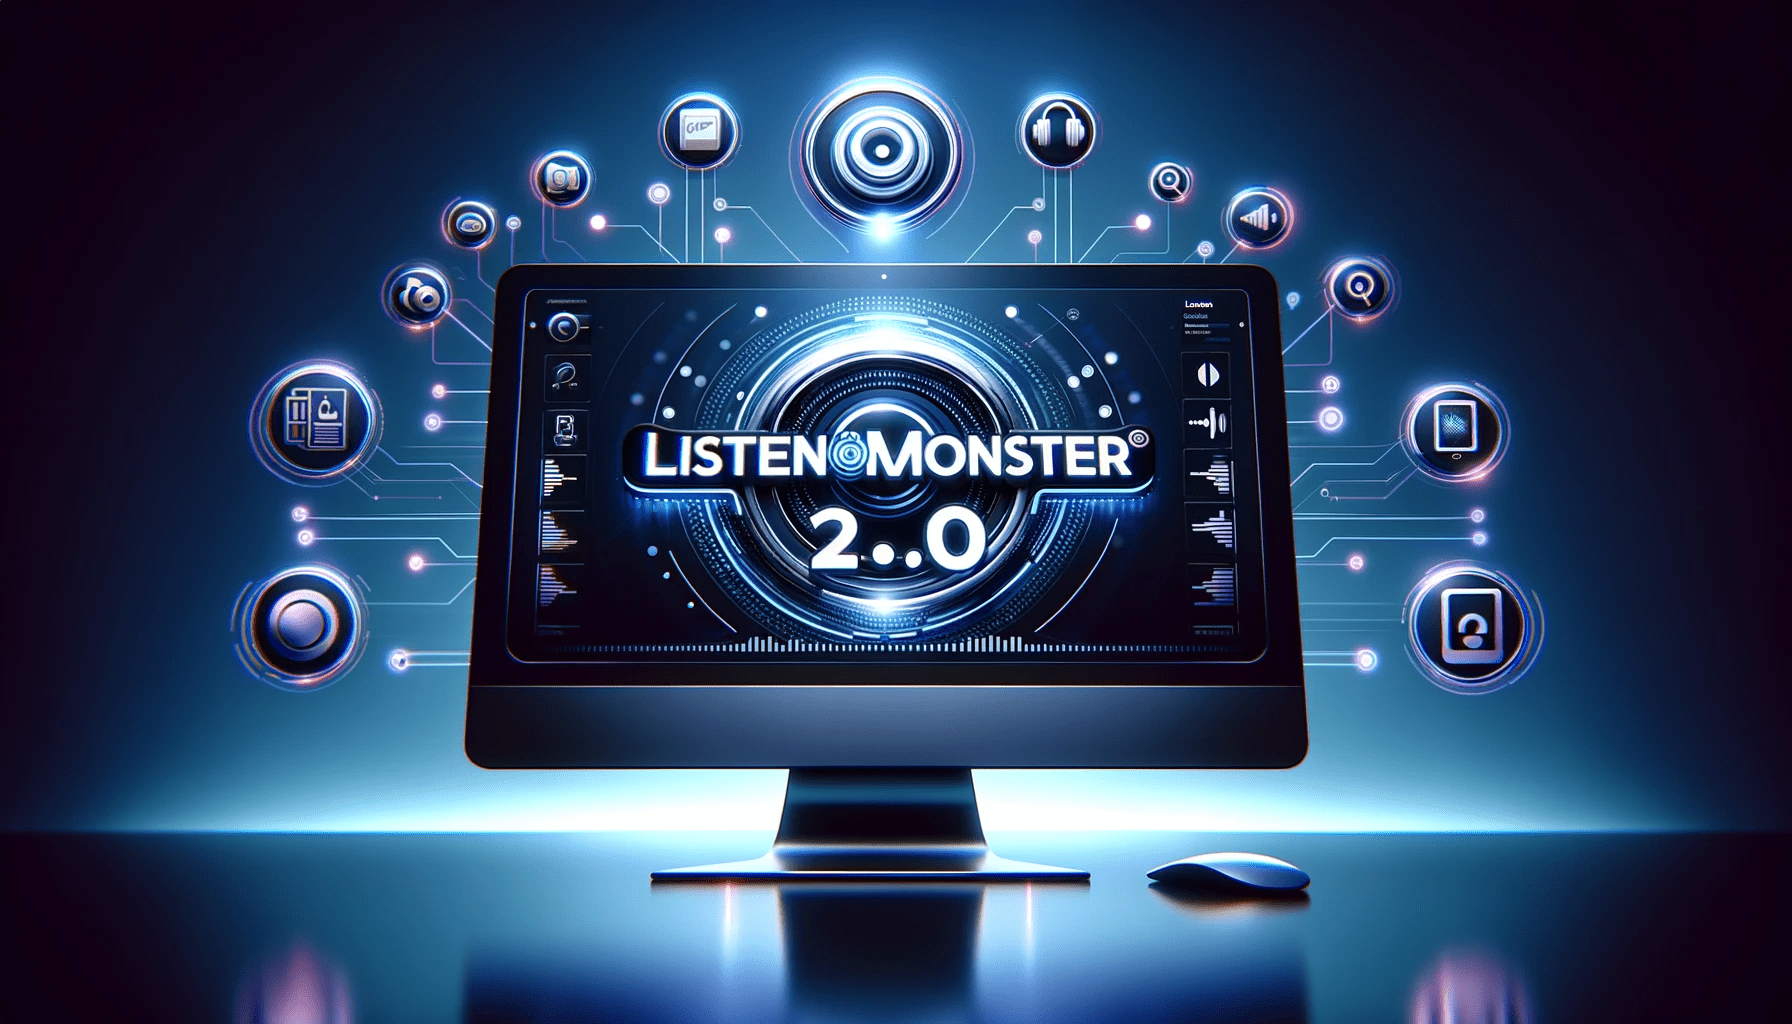 ListenMonster 2.0